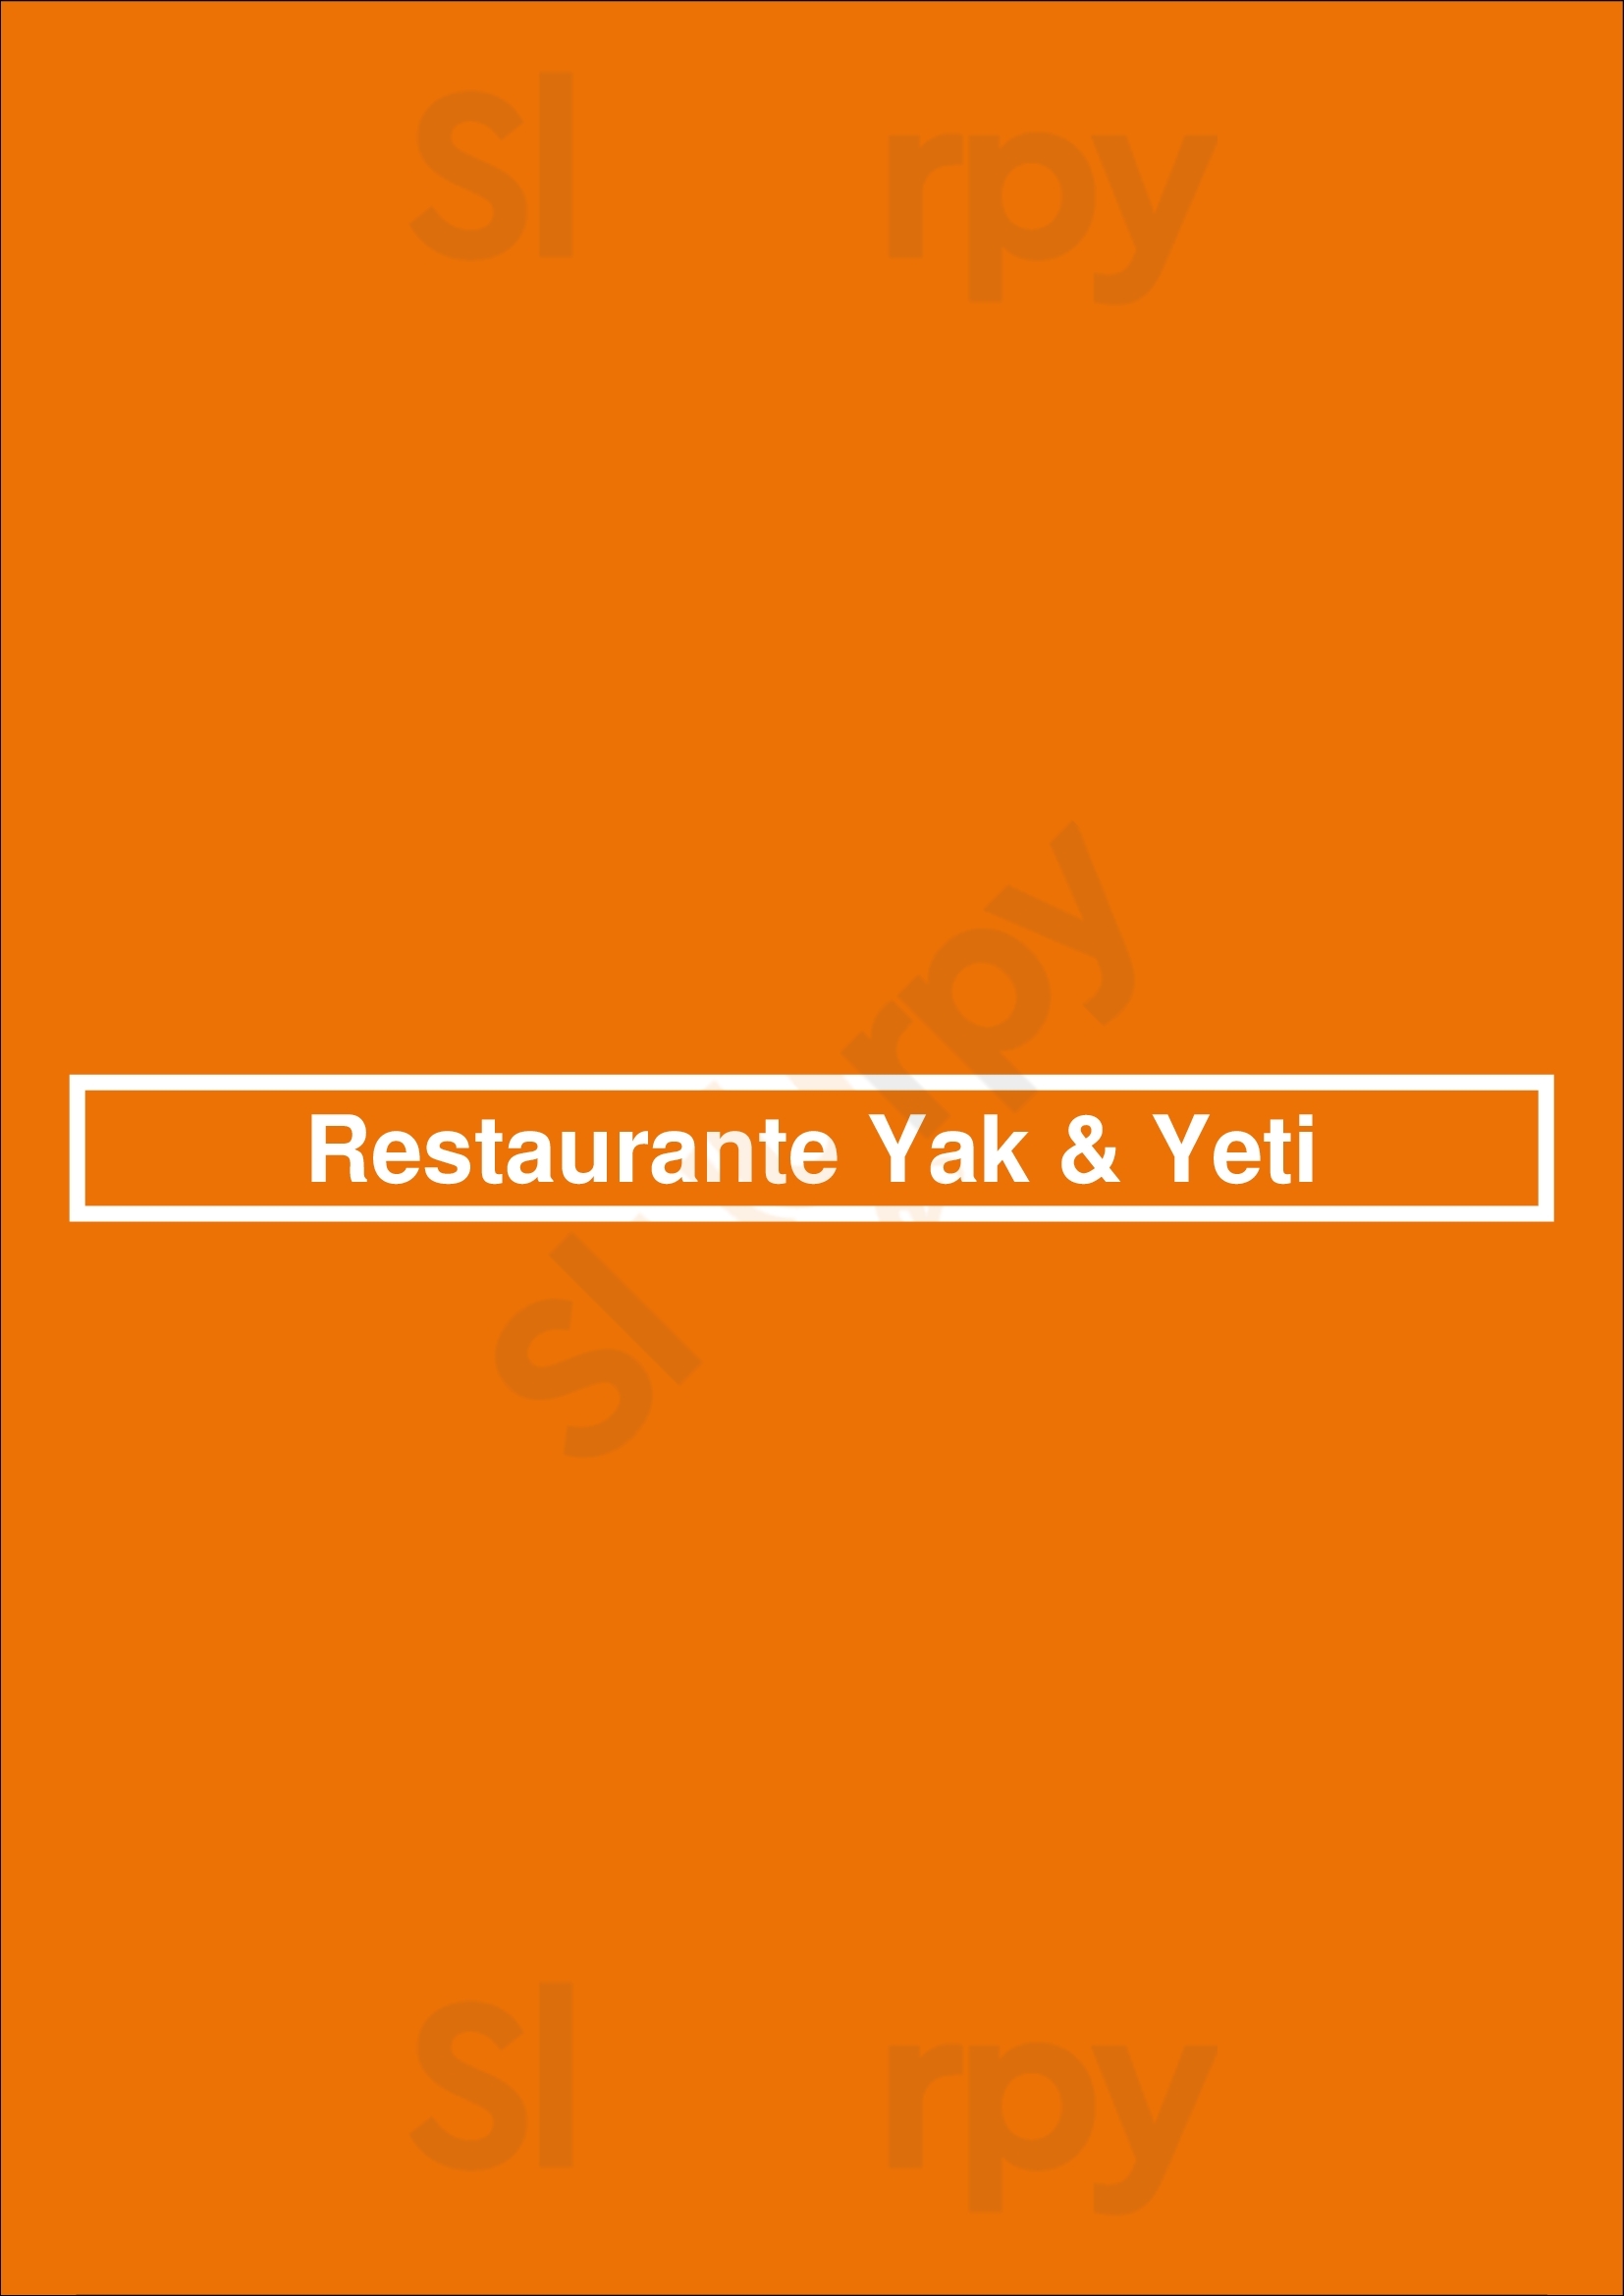 Restaurante Yak & Yeti Lisboa Menu - 1